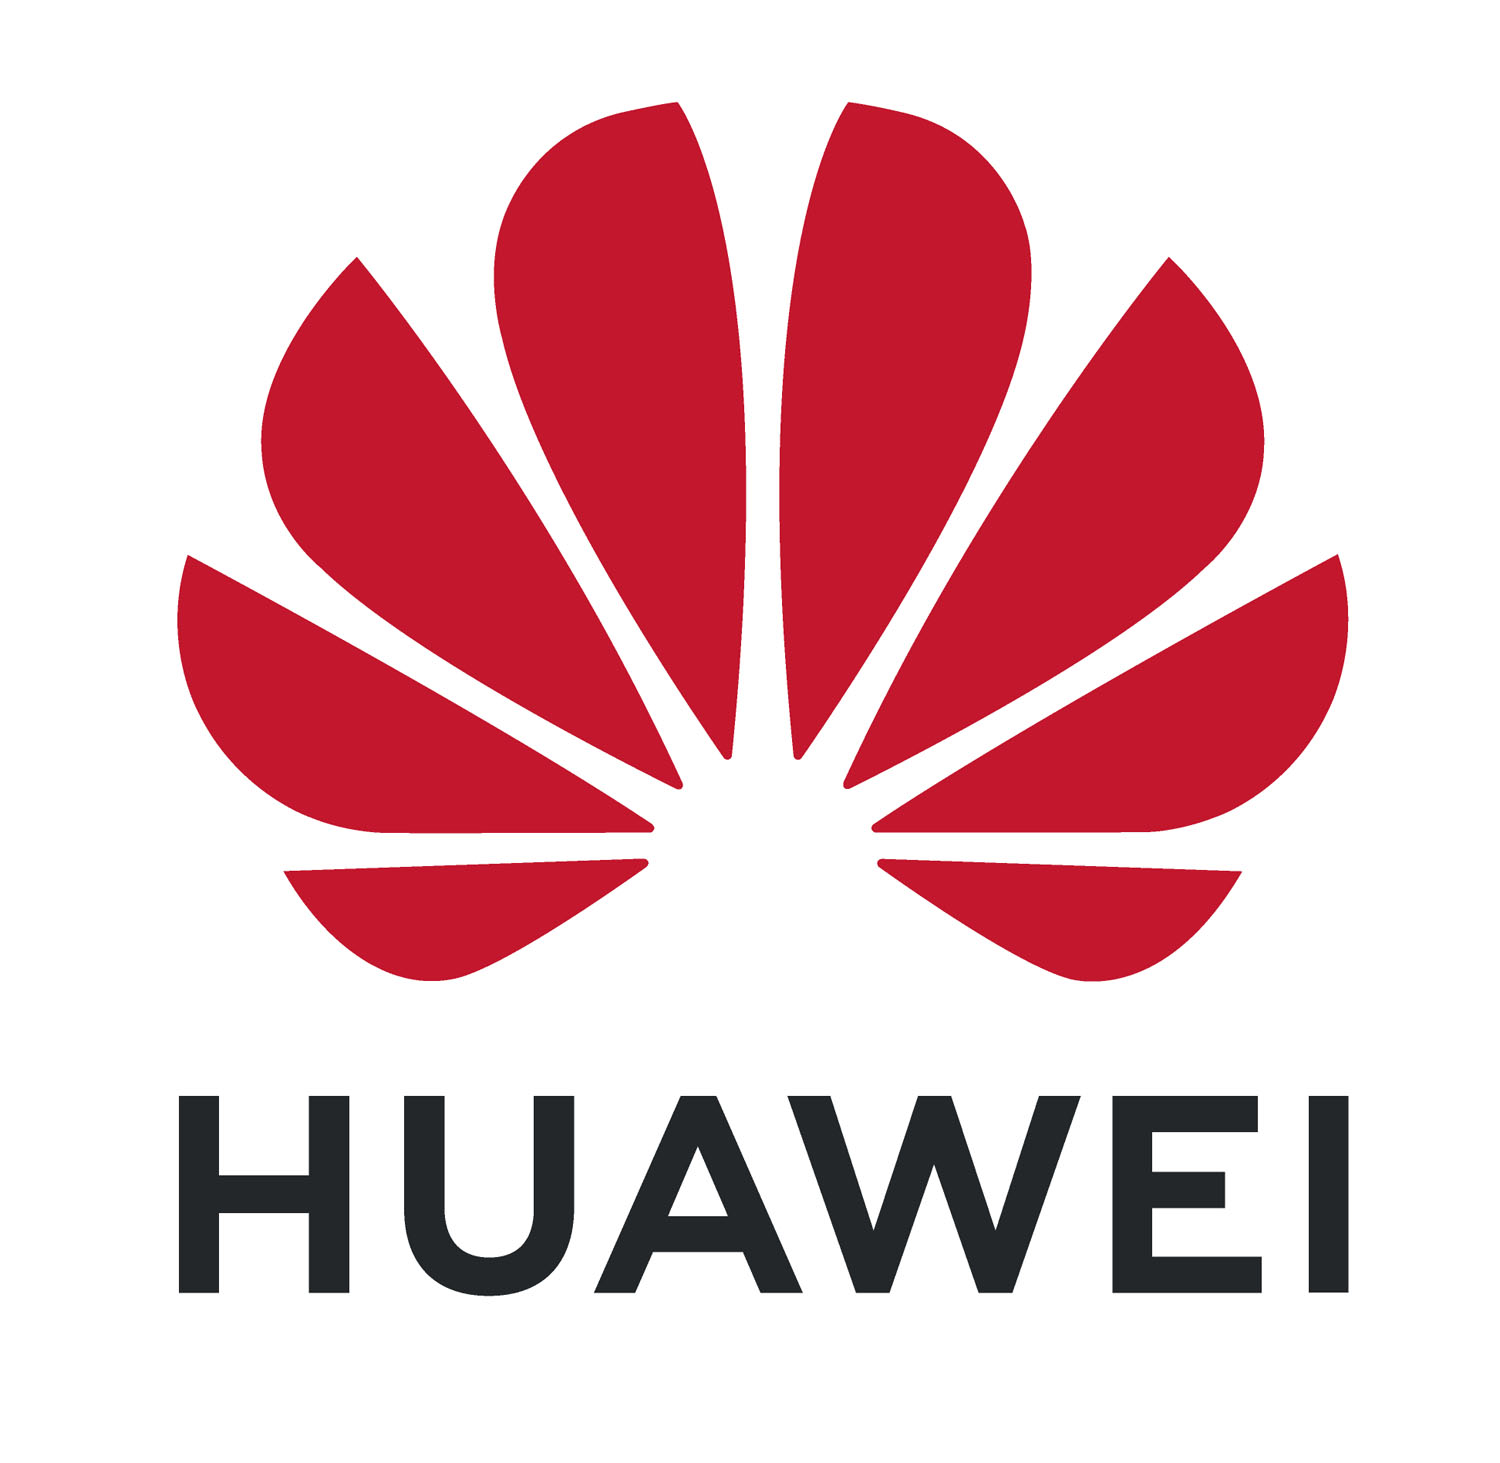 HUAWEI-logo-copy.jpg